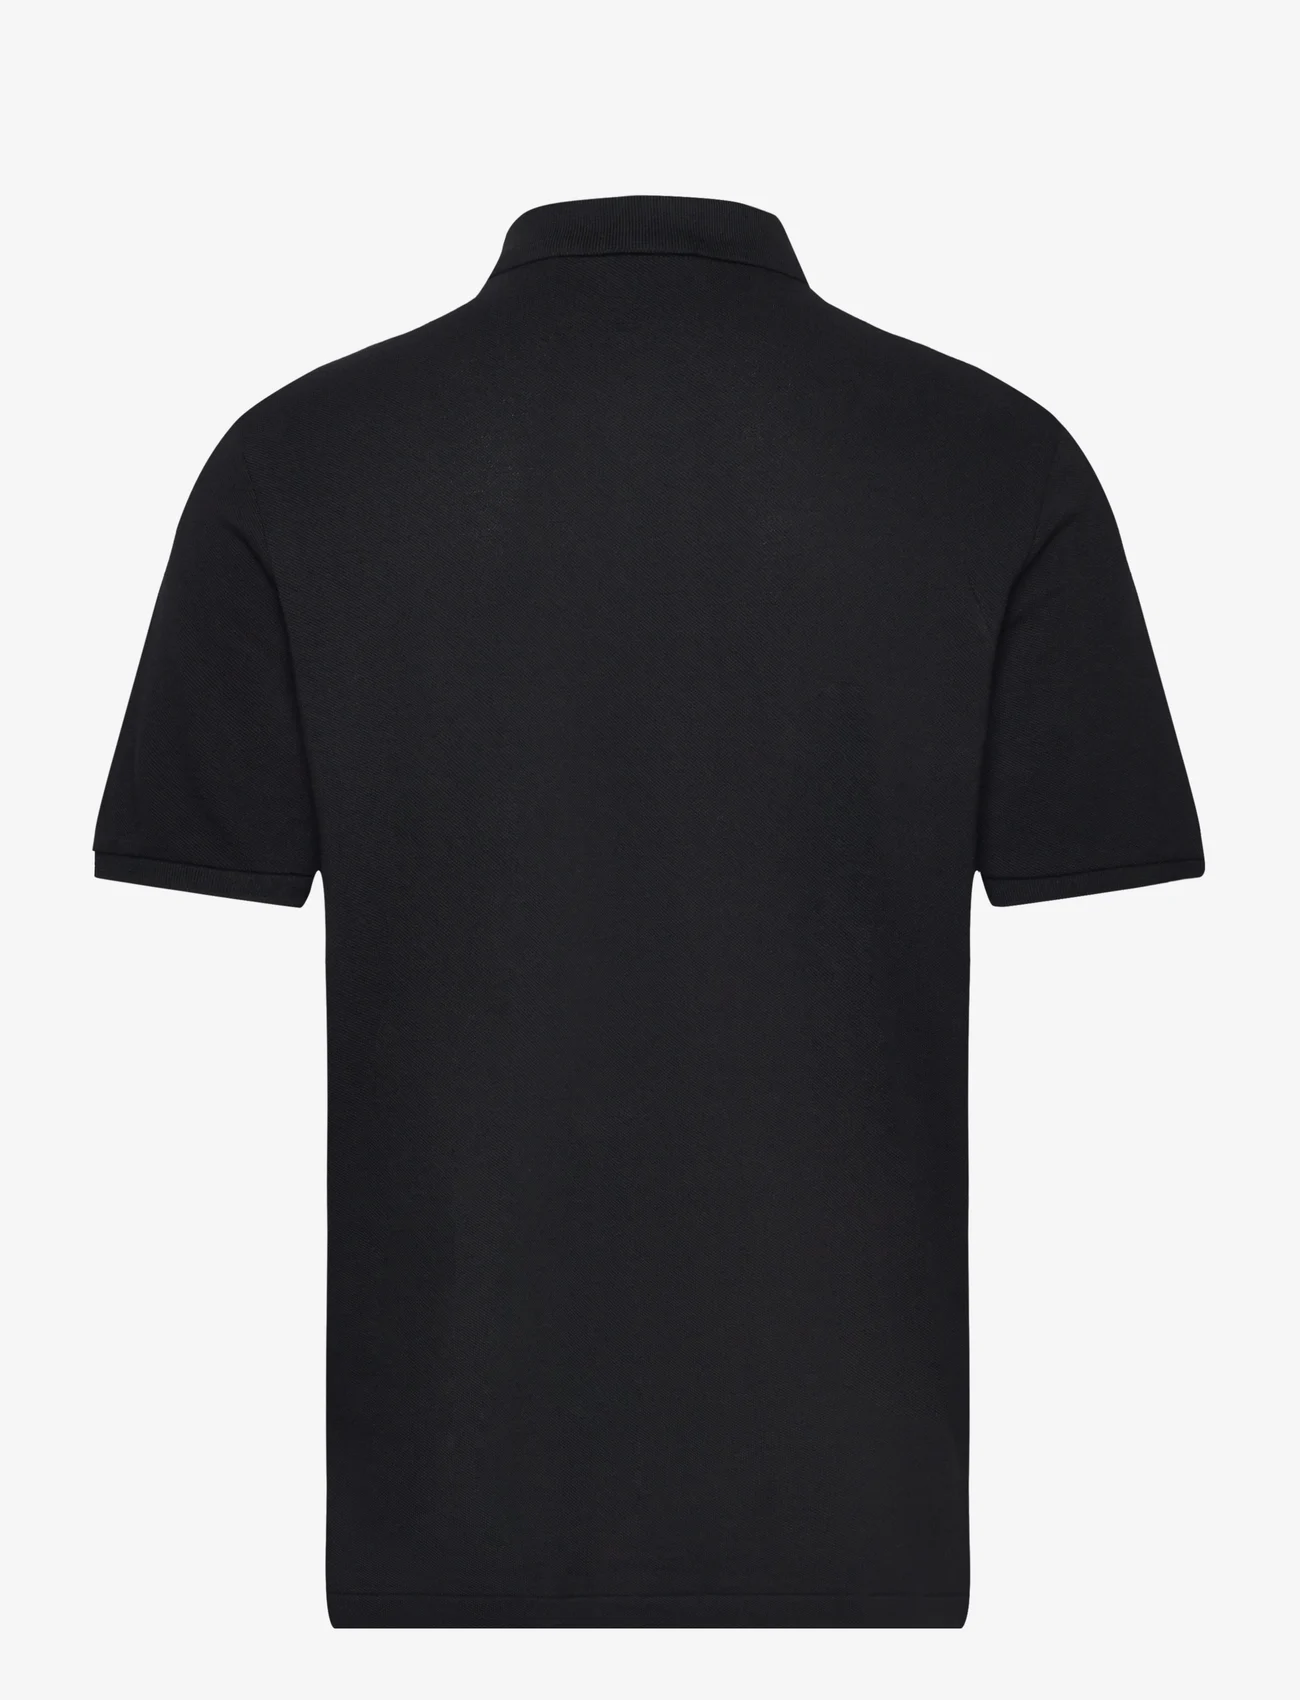 Polo Ralph Lauren - Classic Fit Logo Mesh Polo Shirt - lühikeste varrukatega polod - polo black - 1